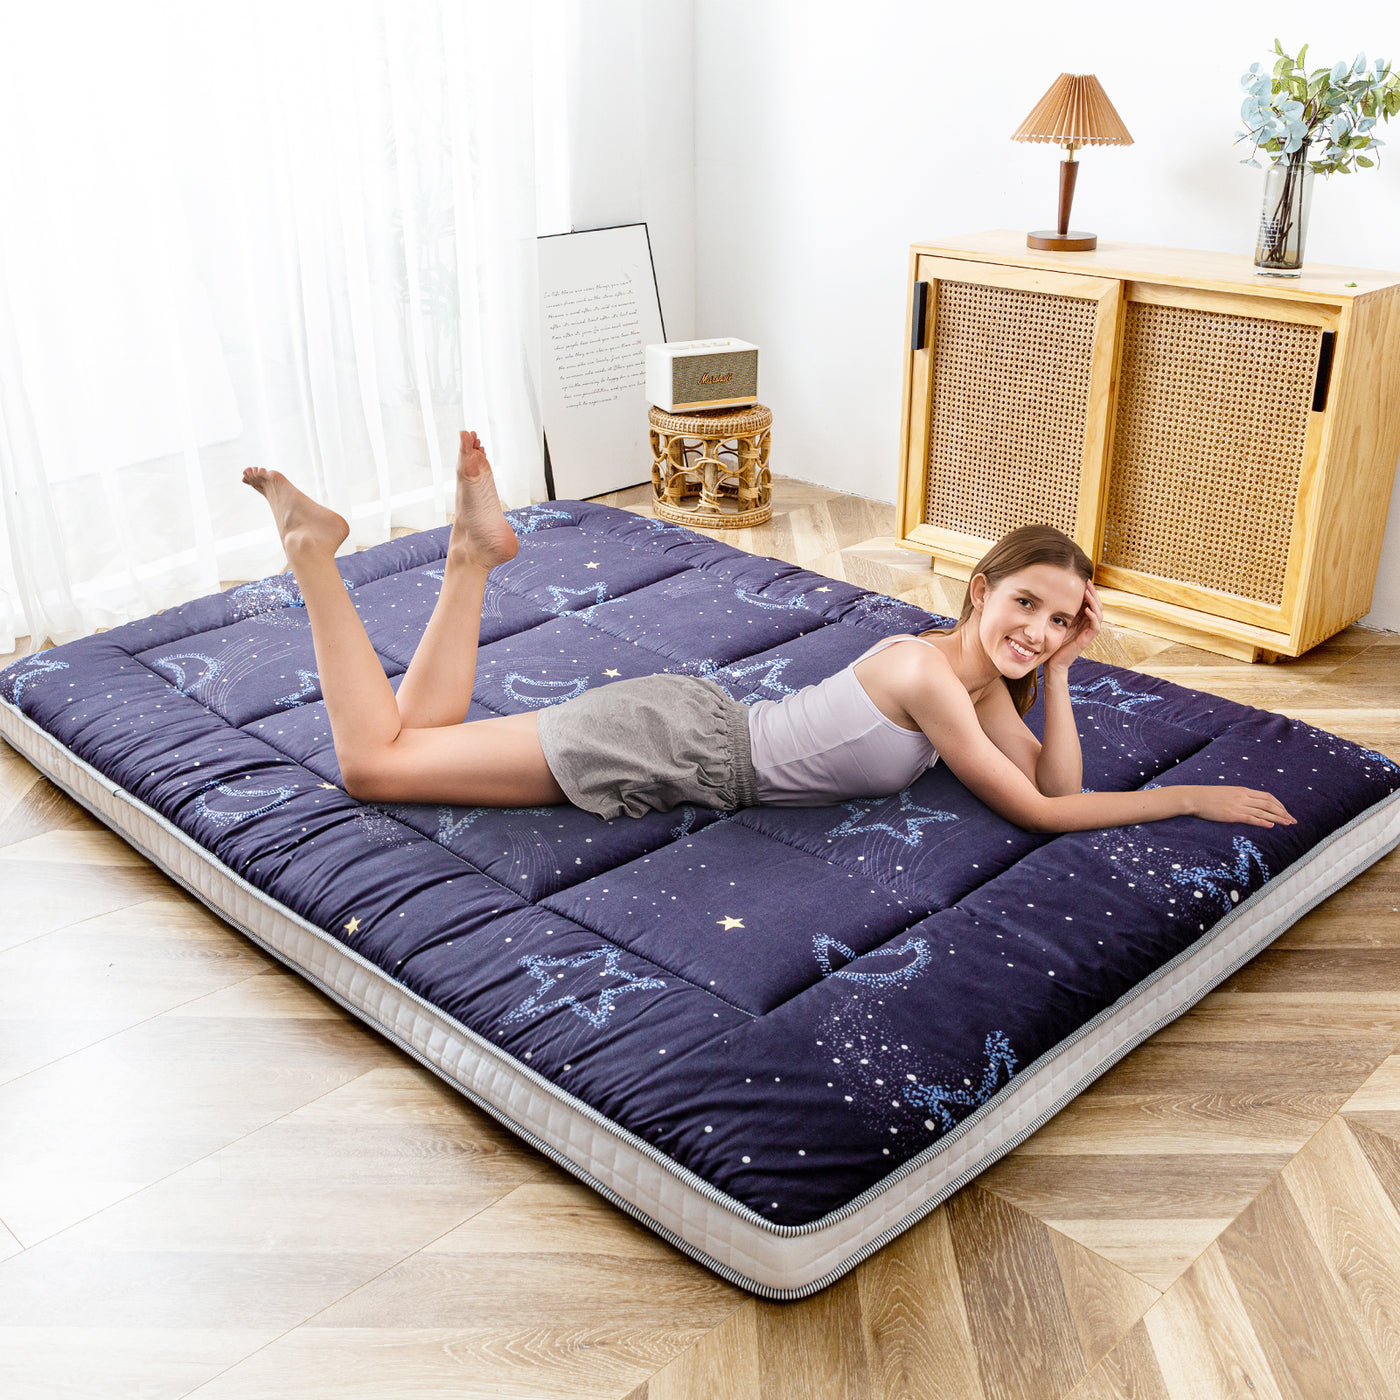 floor mattress#pattern_moon-and-star